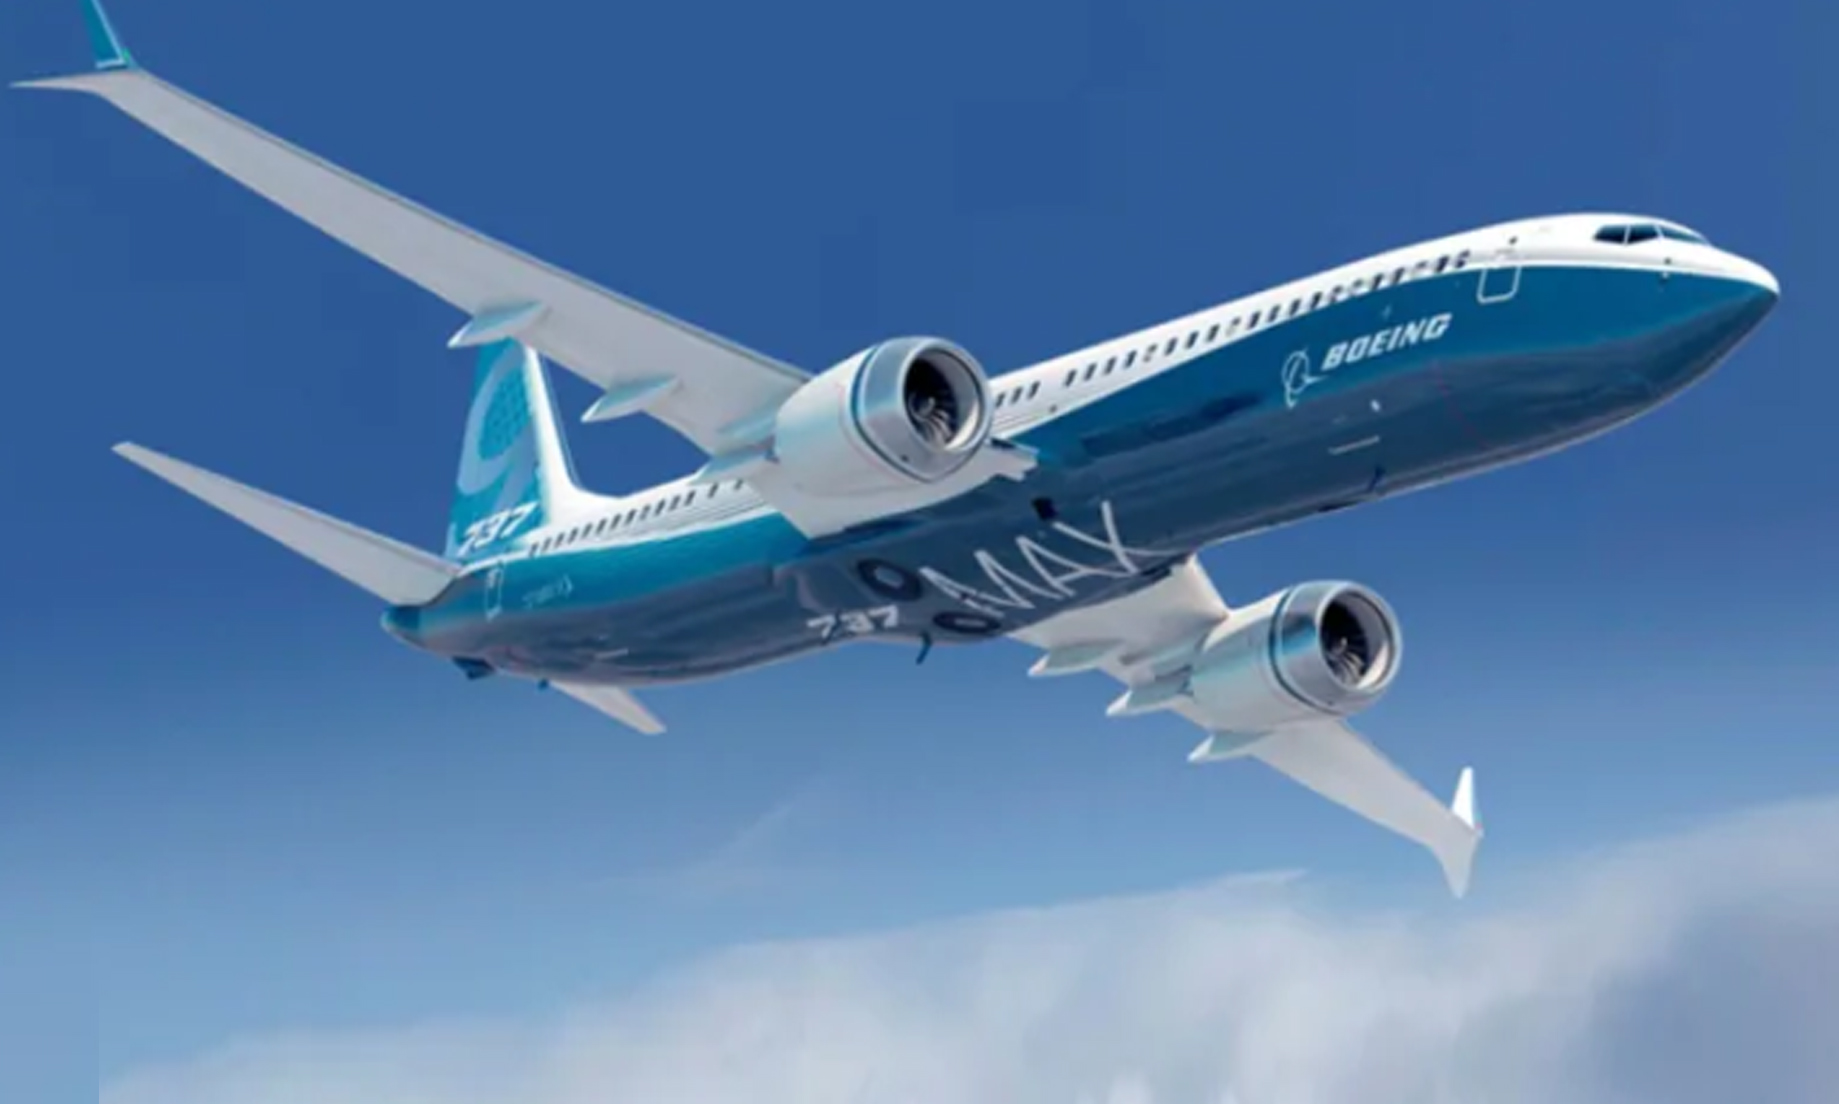 U.S. aviation regulator says “no basis” to ground Boeing 737 Max despite crashes